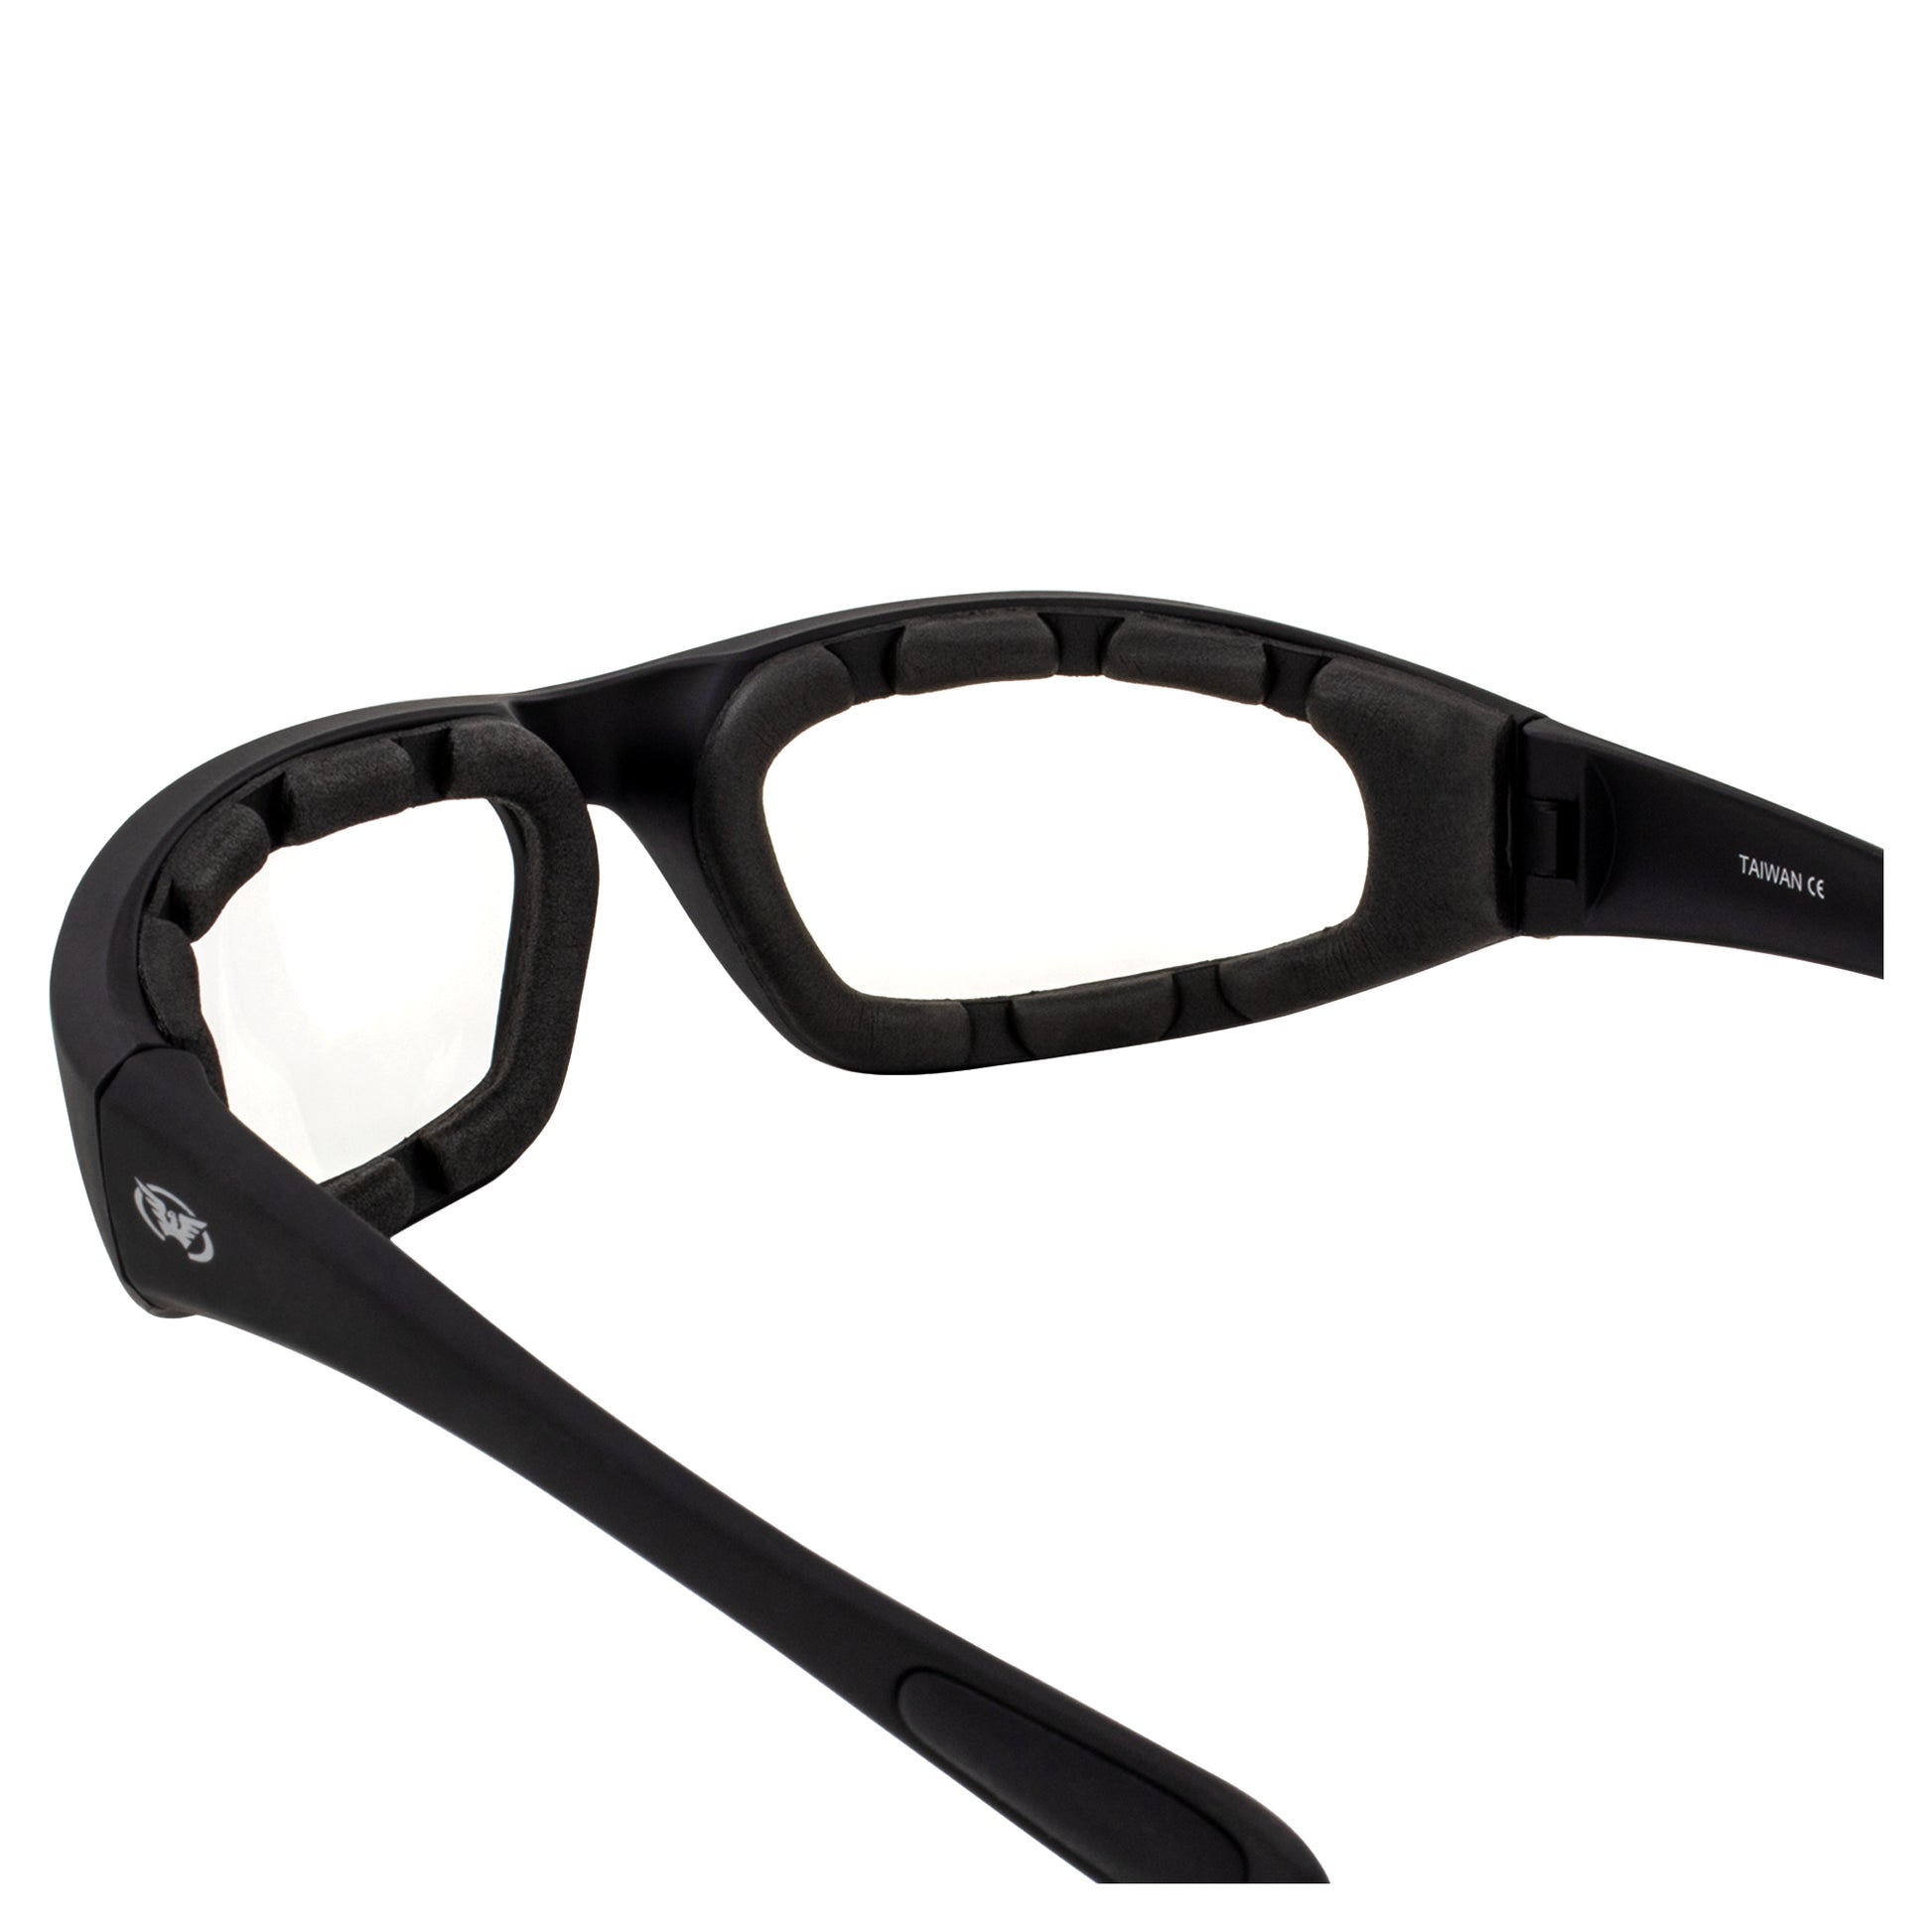 Global Vision Kickback Foam Padded Smoke Lens Sunglasses Sunglasses Virginia City Motorcycle Company Apparel 